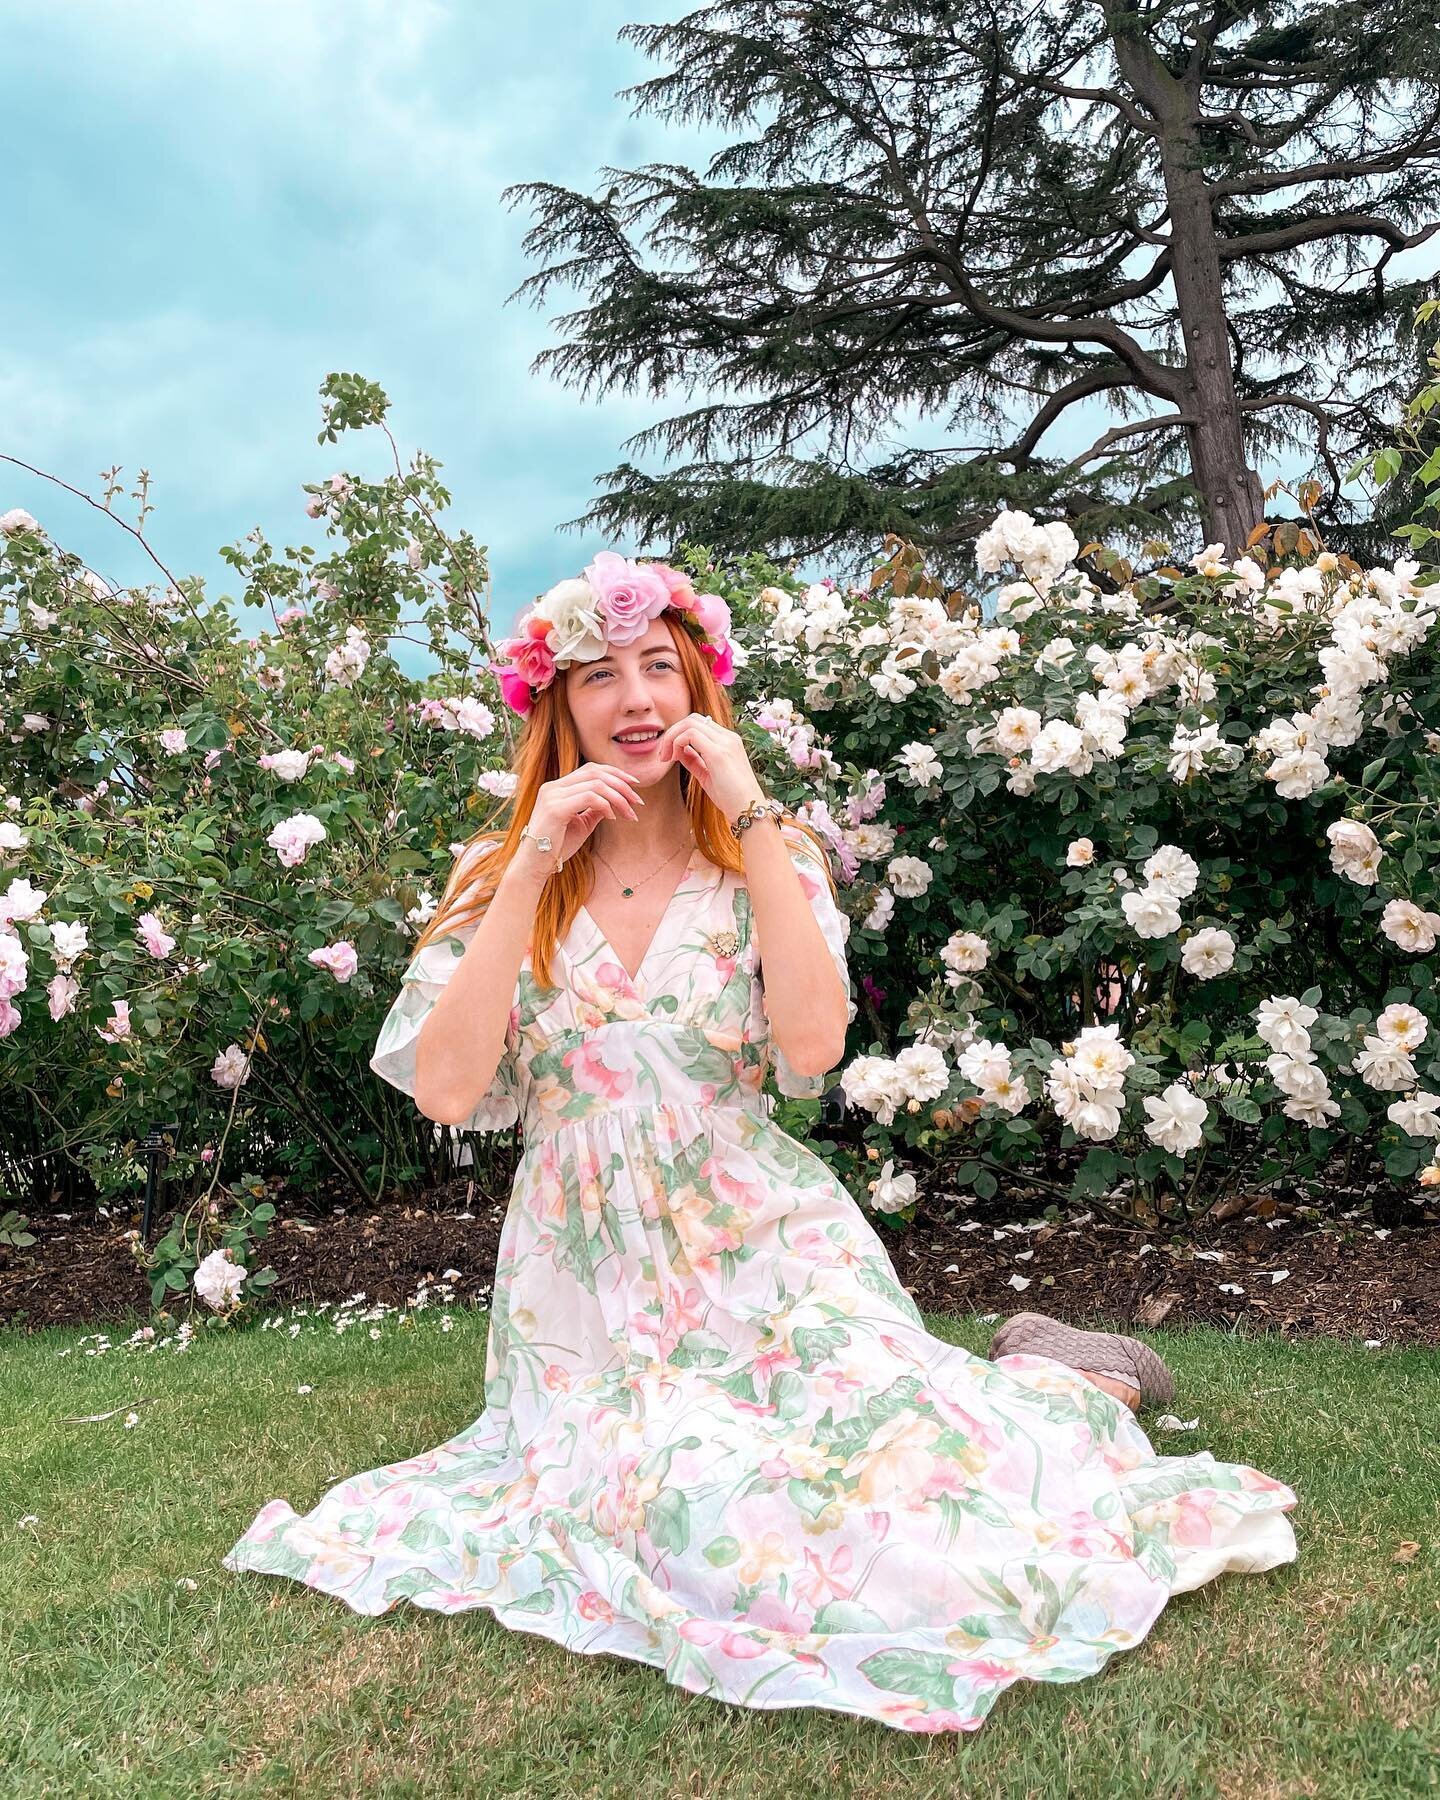 midsummer 🌸 folk⁣
dress a vintage from japan ⁣
at the rose garden in kew